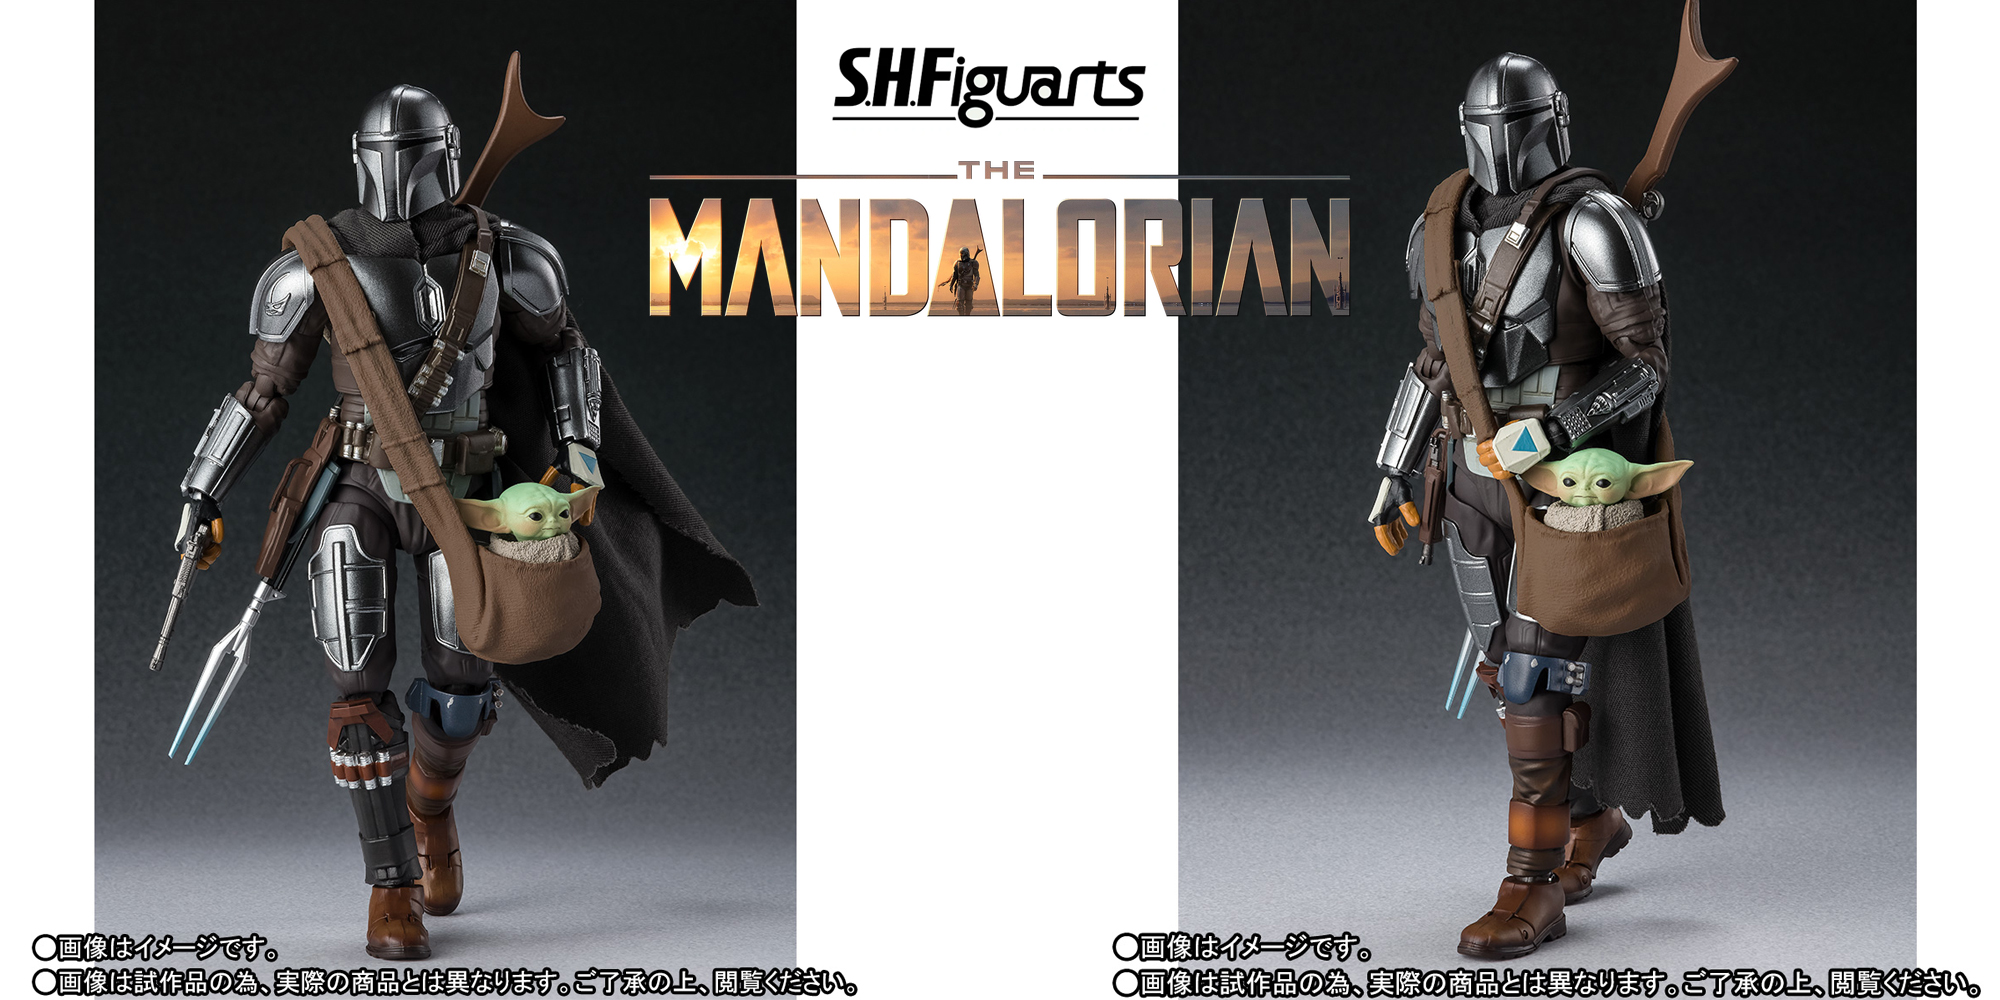 Bandai's S.H. Figuarts Mandalorian From Season 2 Revealed